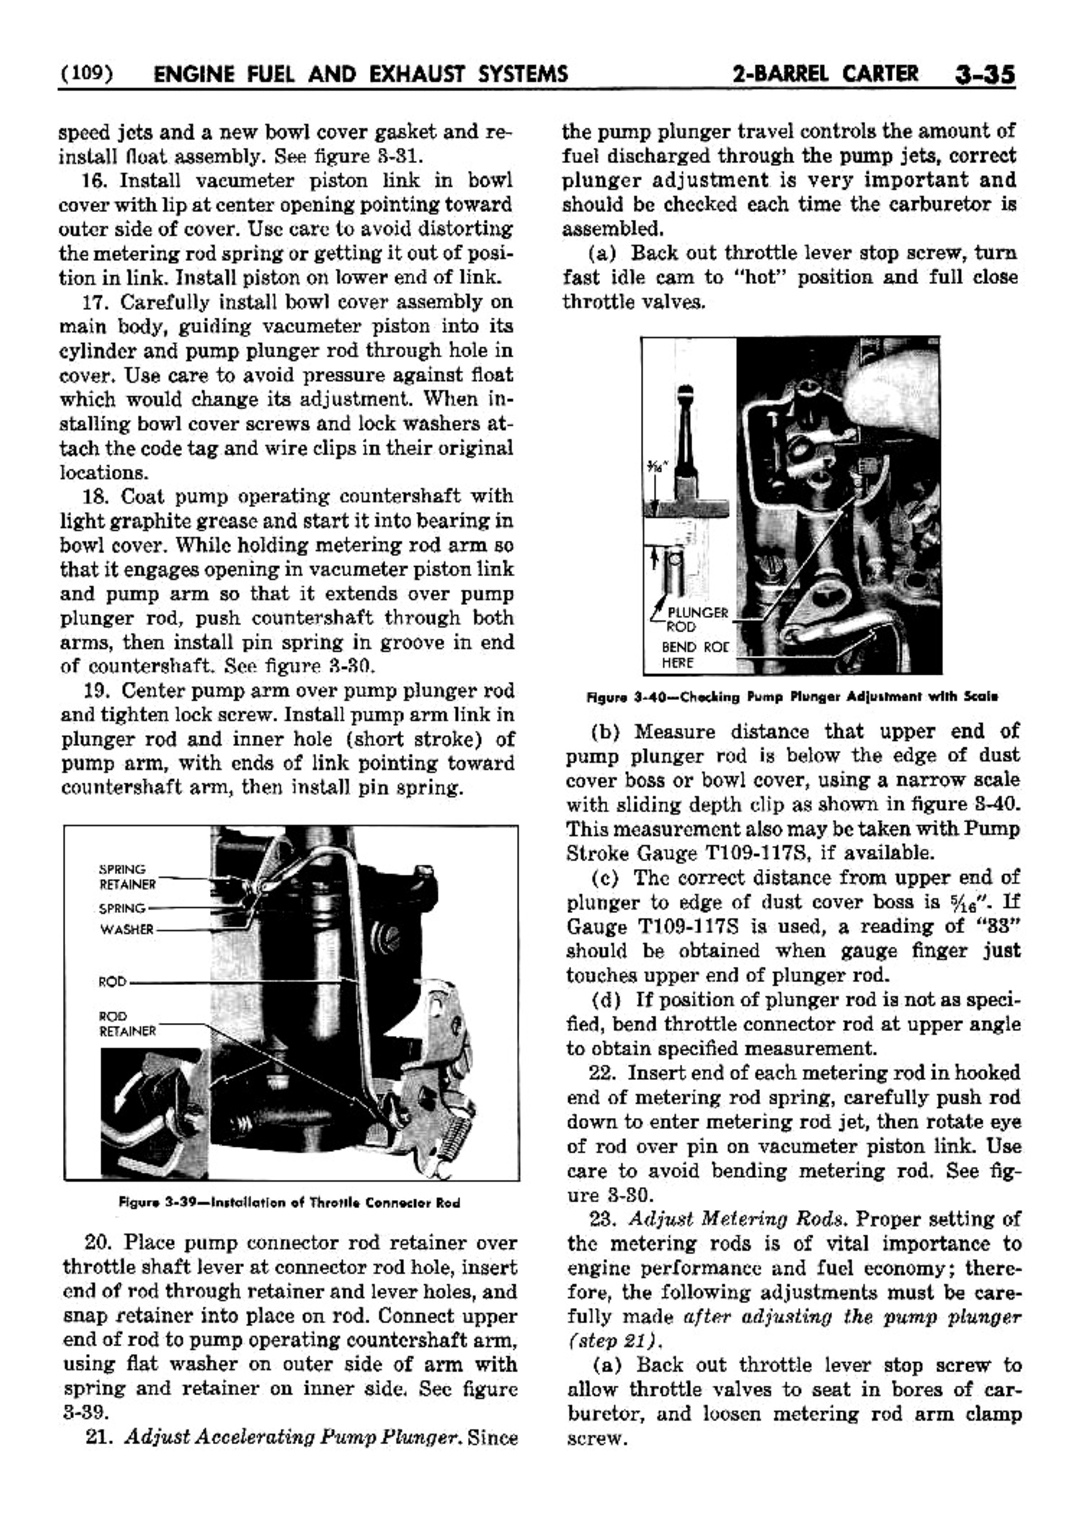 n_04 1952 Buick Shop Manual - Engine Fuel & Exhaust-035-035.jpg